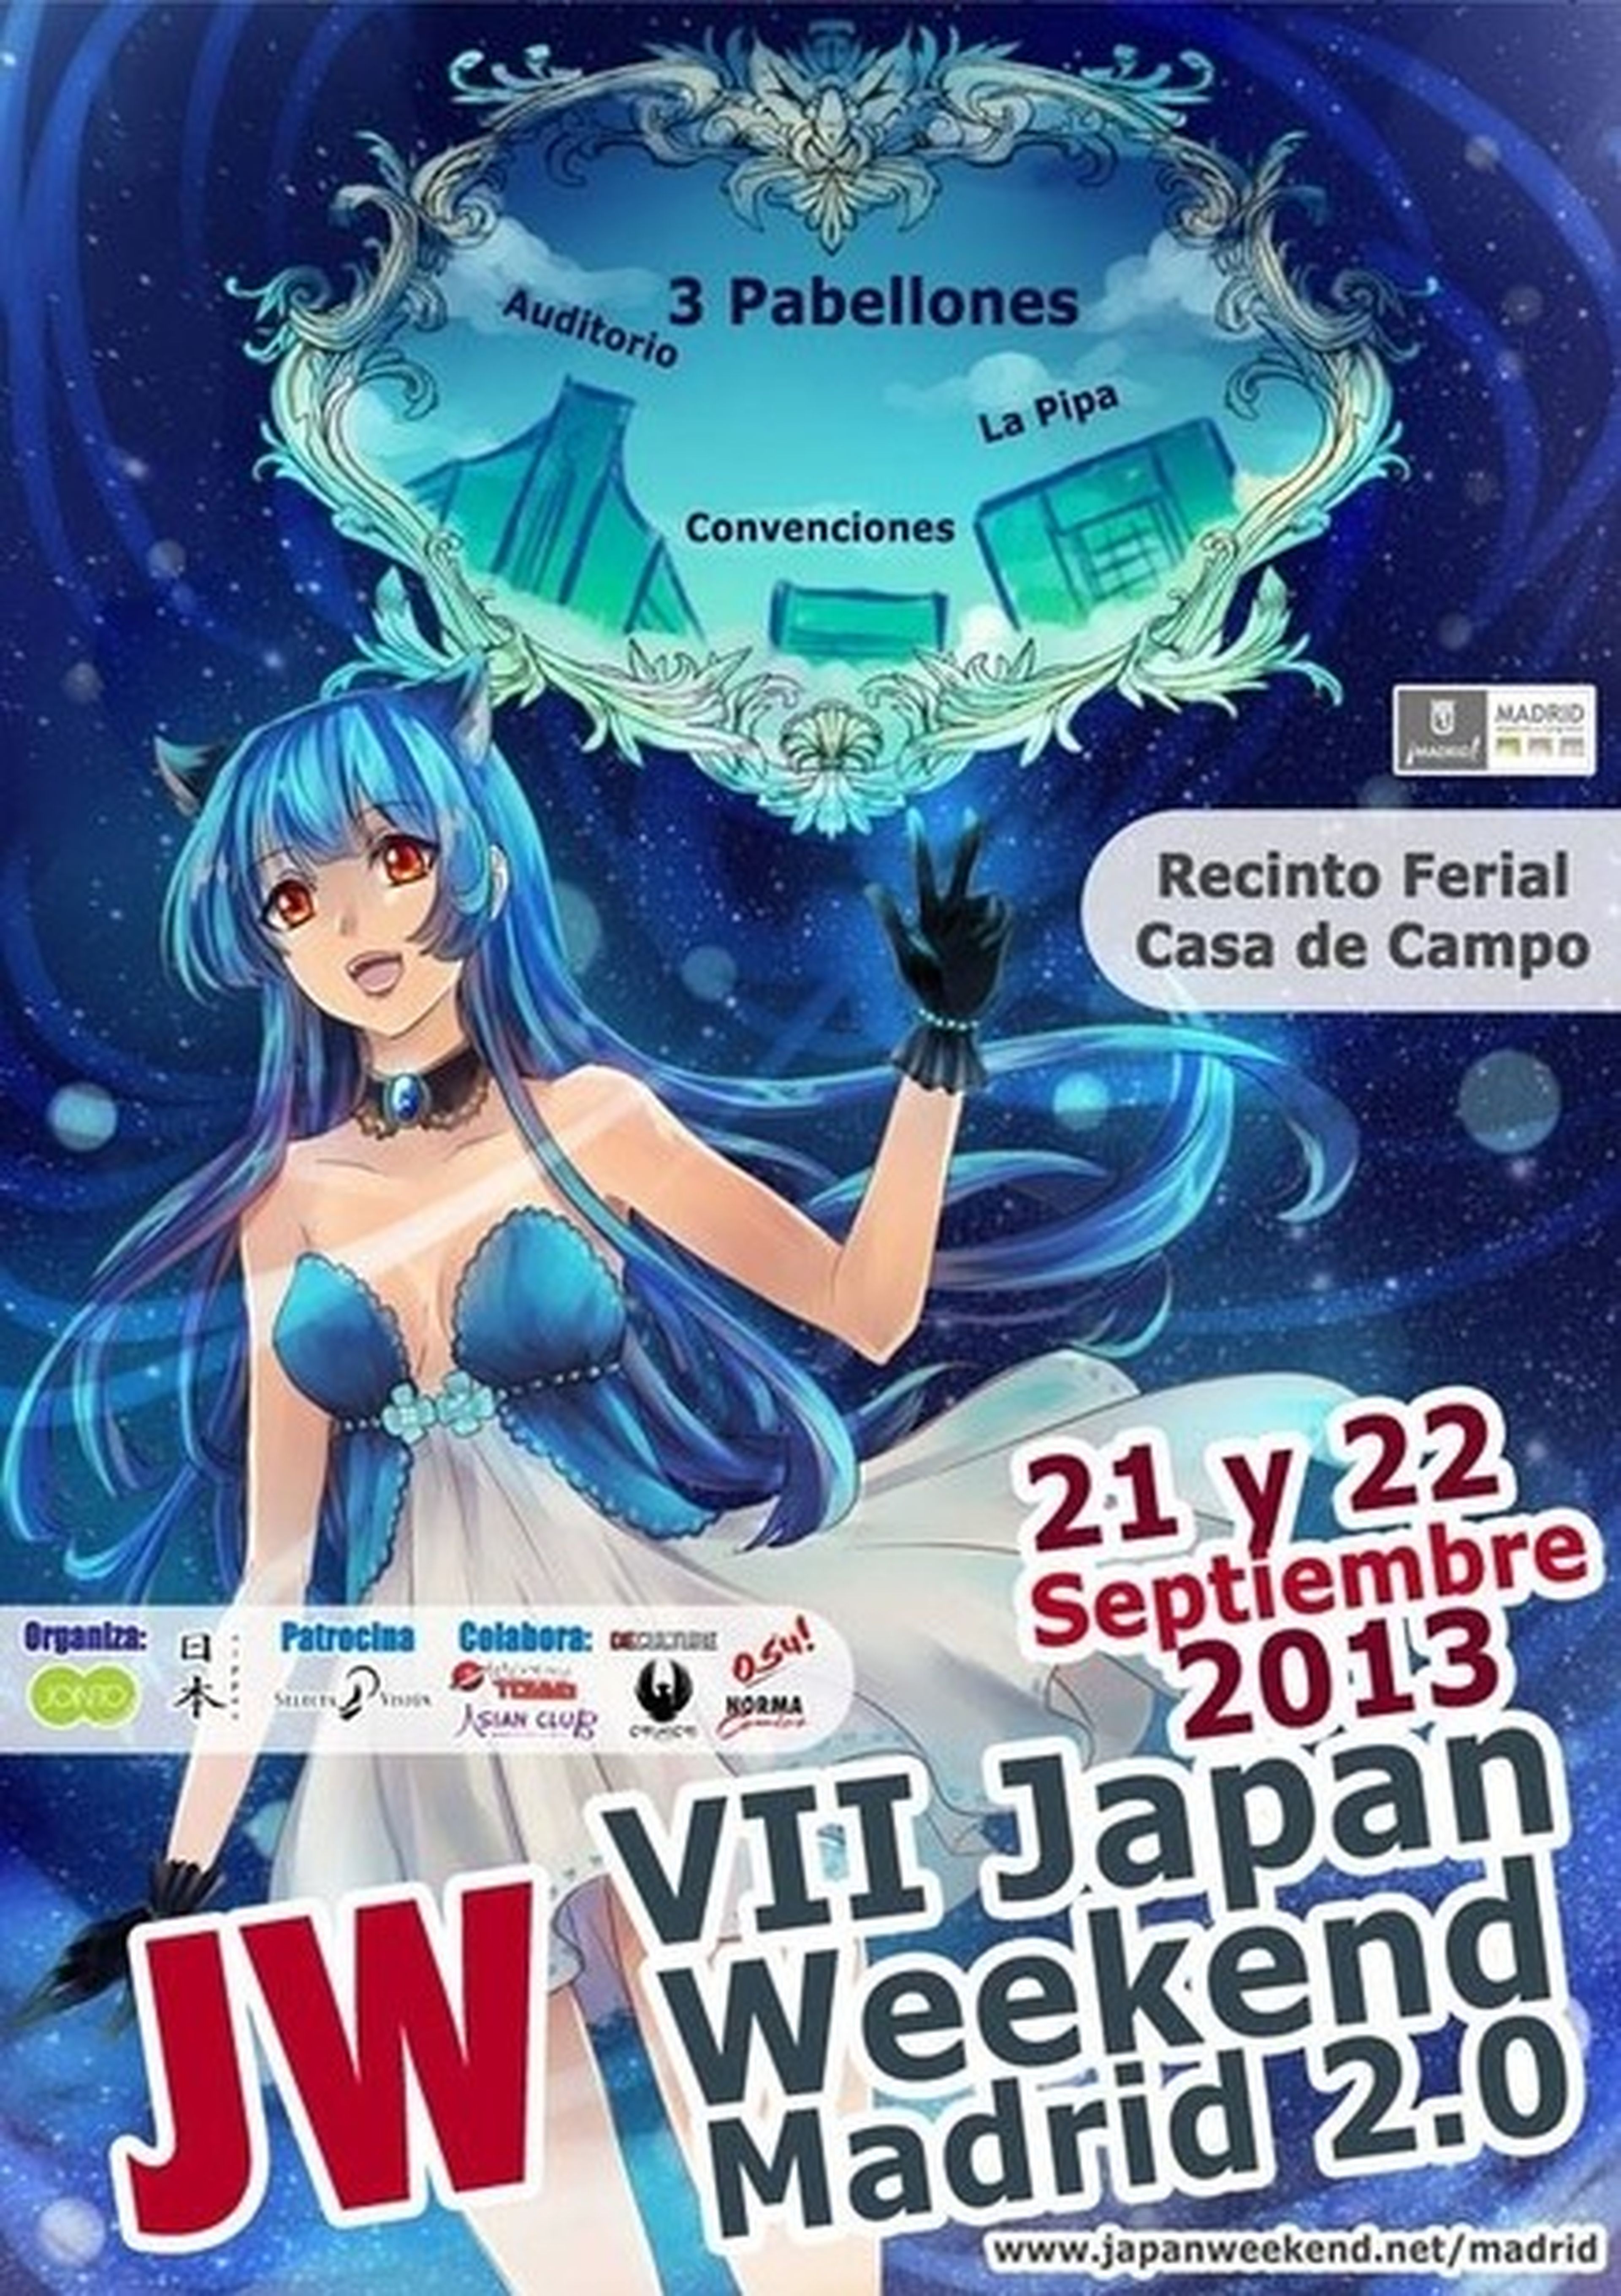 Este fin de semana se celebra la VII Japan Weekend Madrid